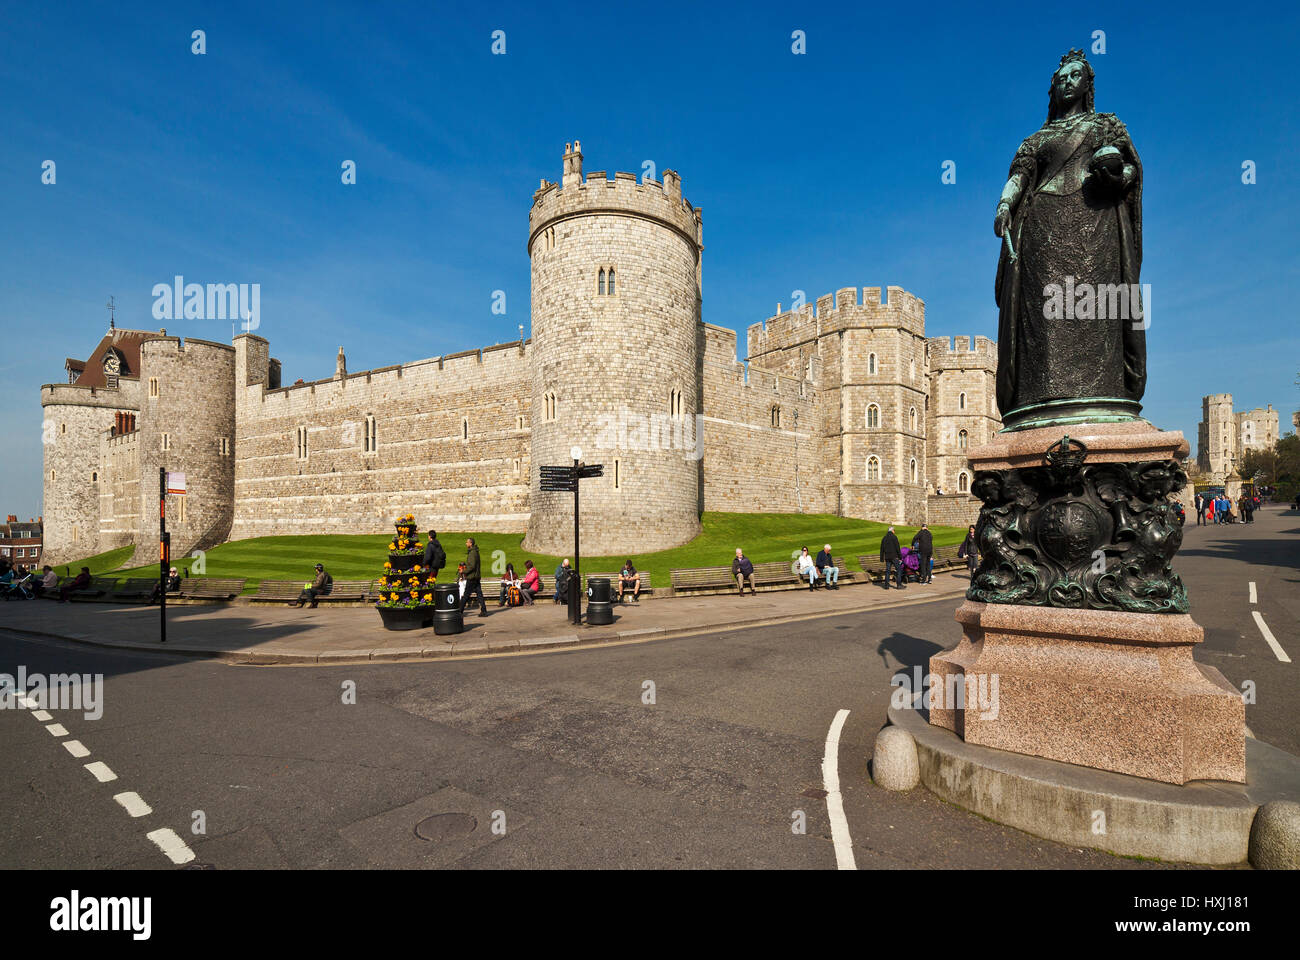 El Castillo de Windsor, Inglaterra. Foto de stock